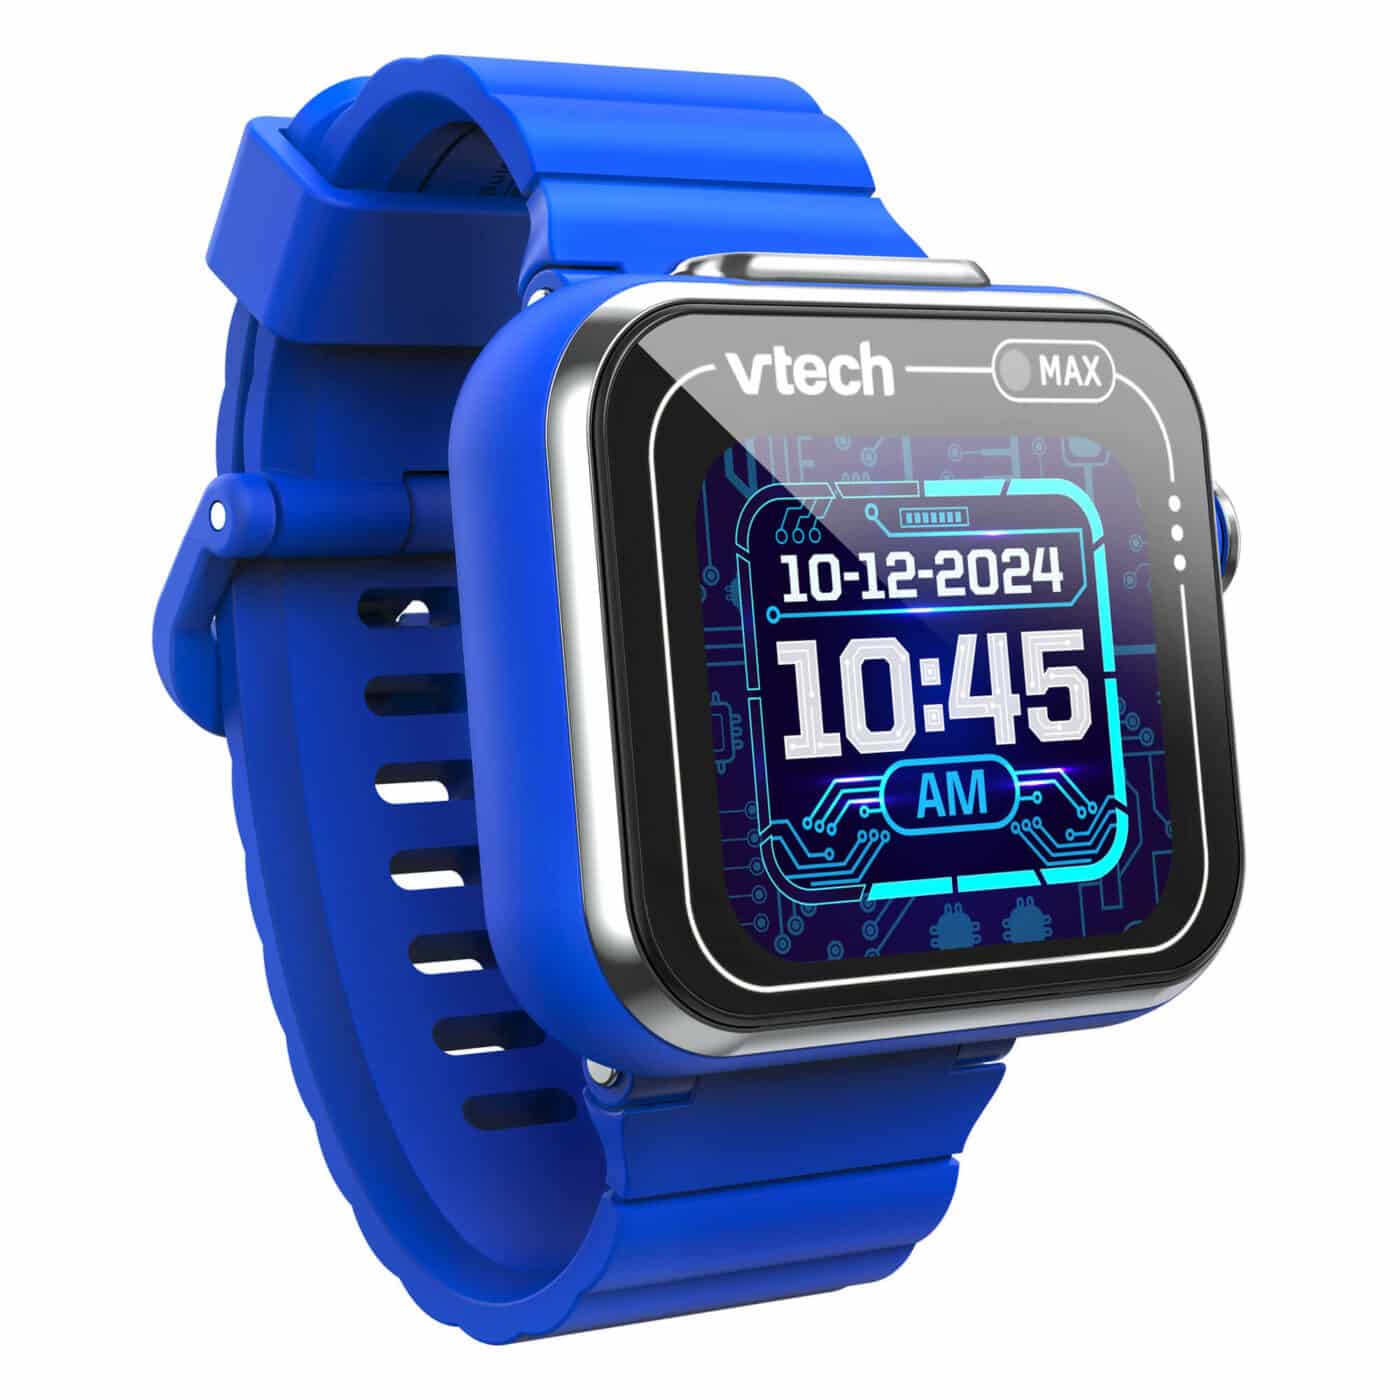 Vtech - Kidizoom Smart Watch Max - Blue1